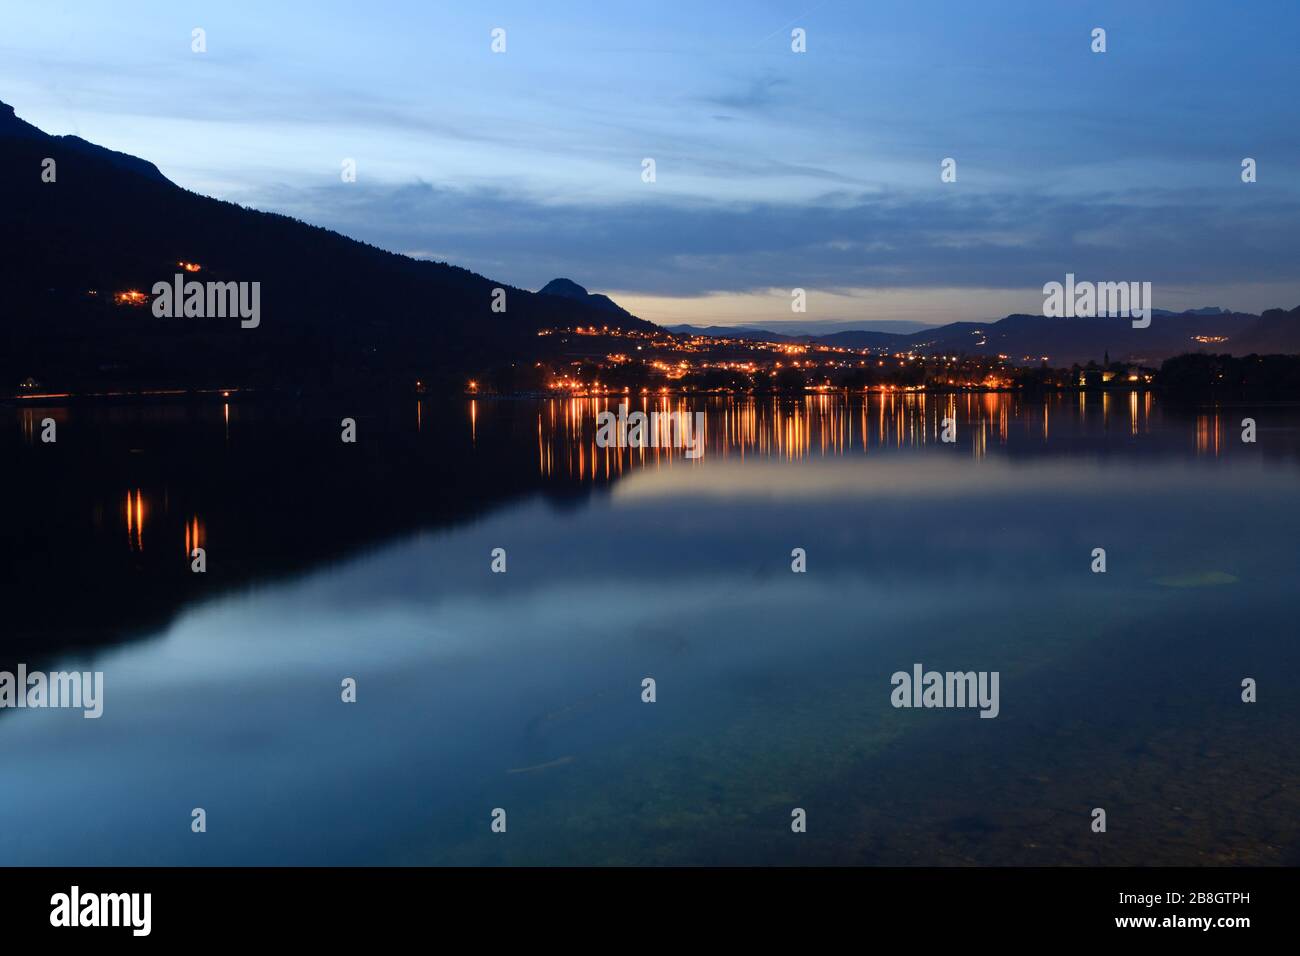 Reflections on lake, Caldonazzo lake, Italy. Italian landscape. Stock Photo